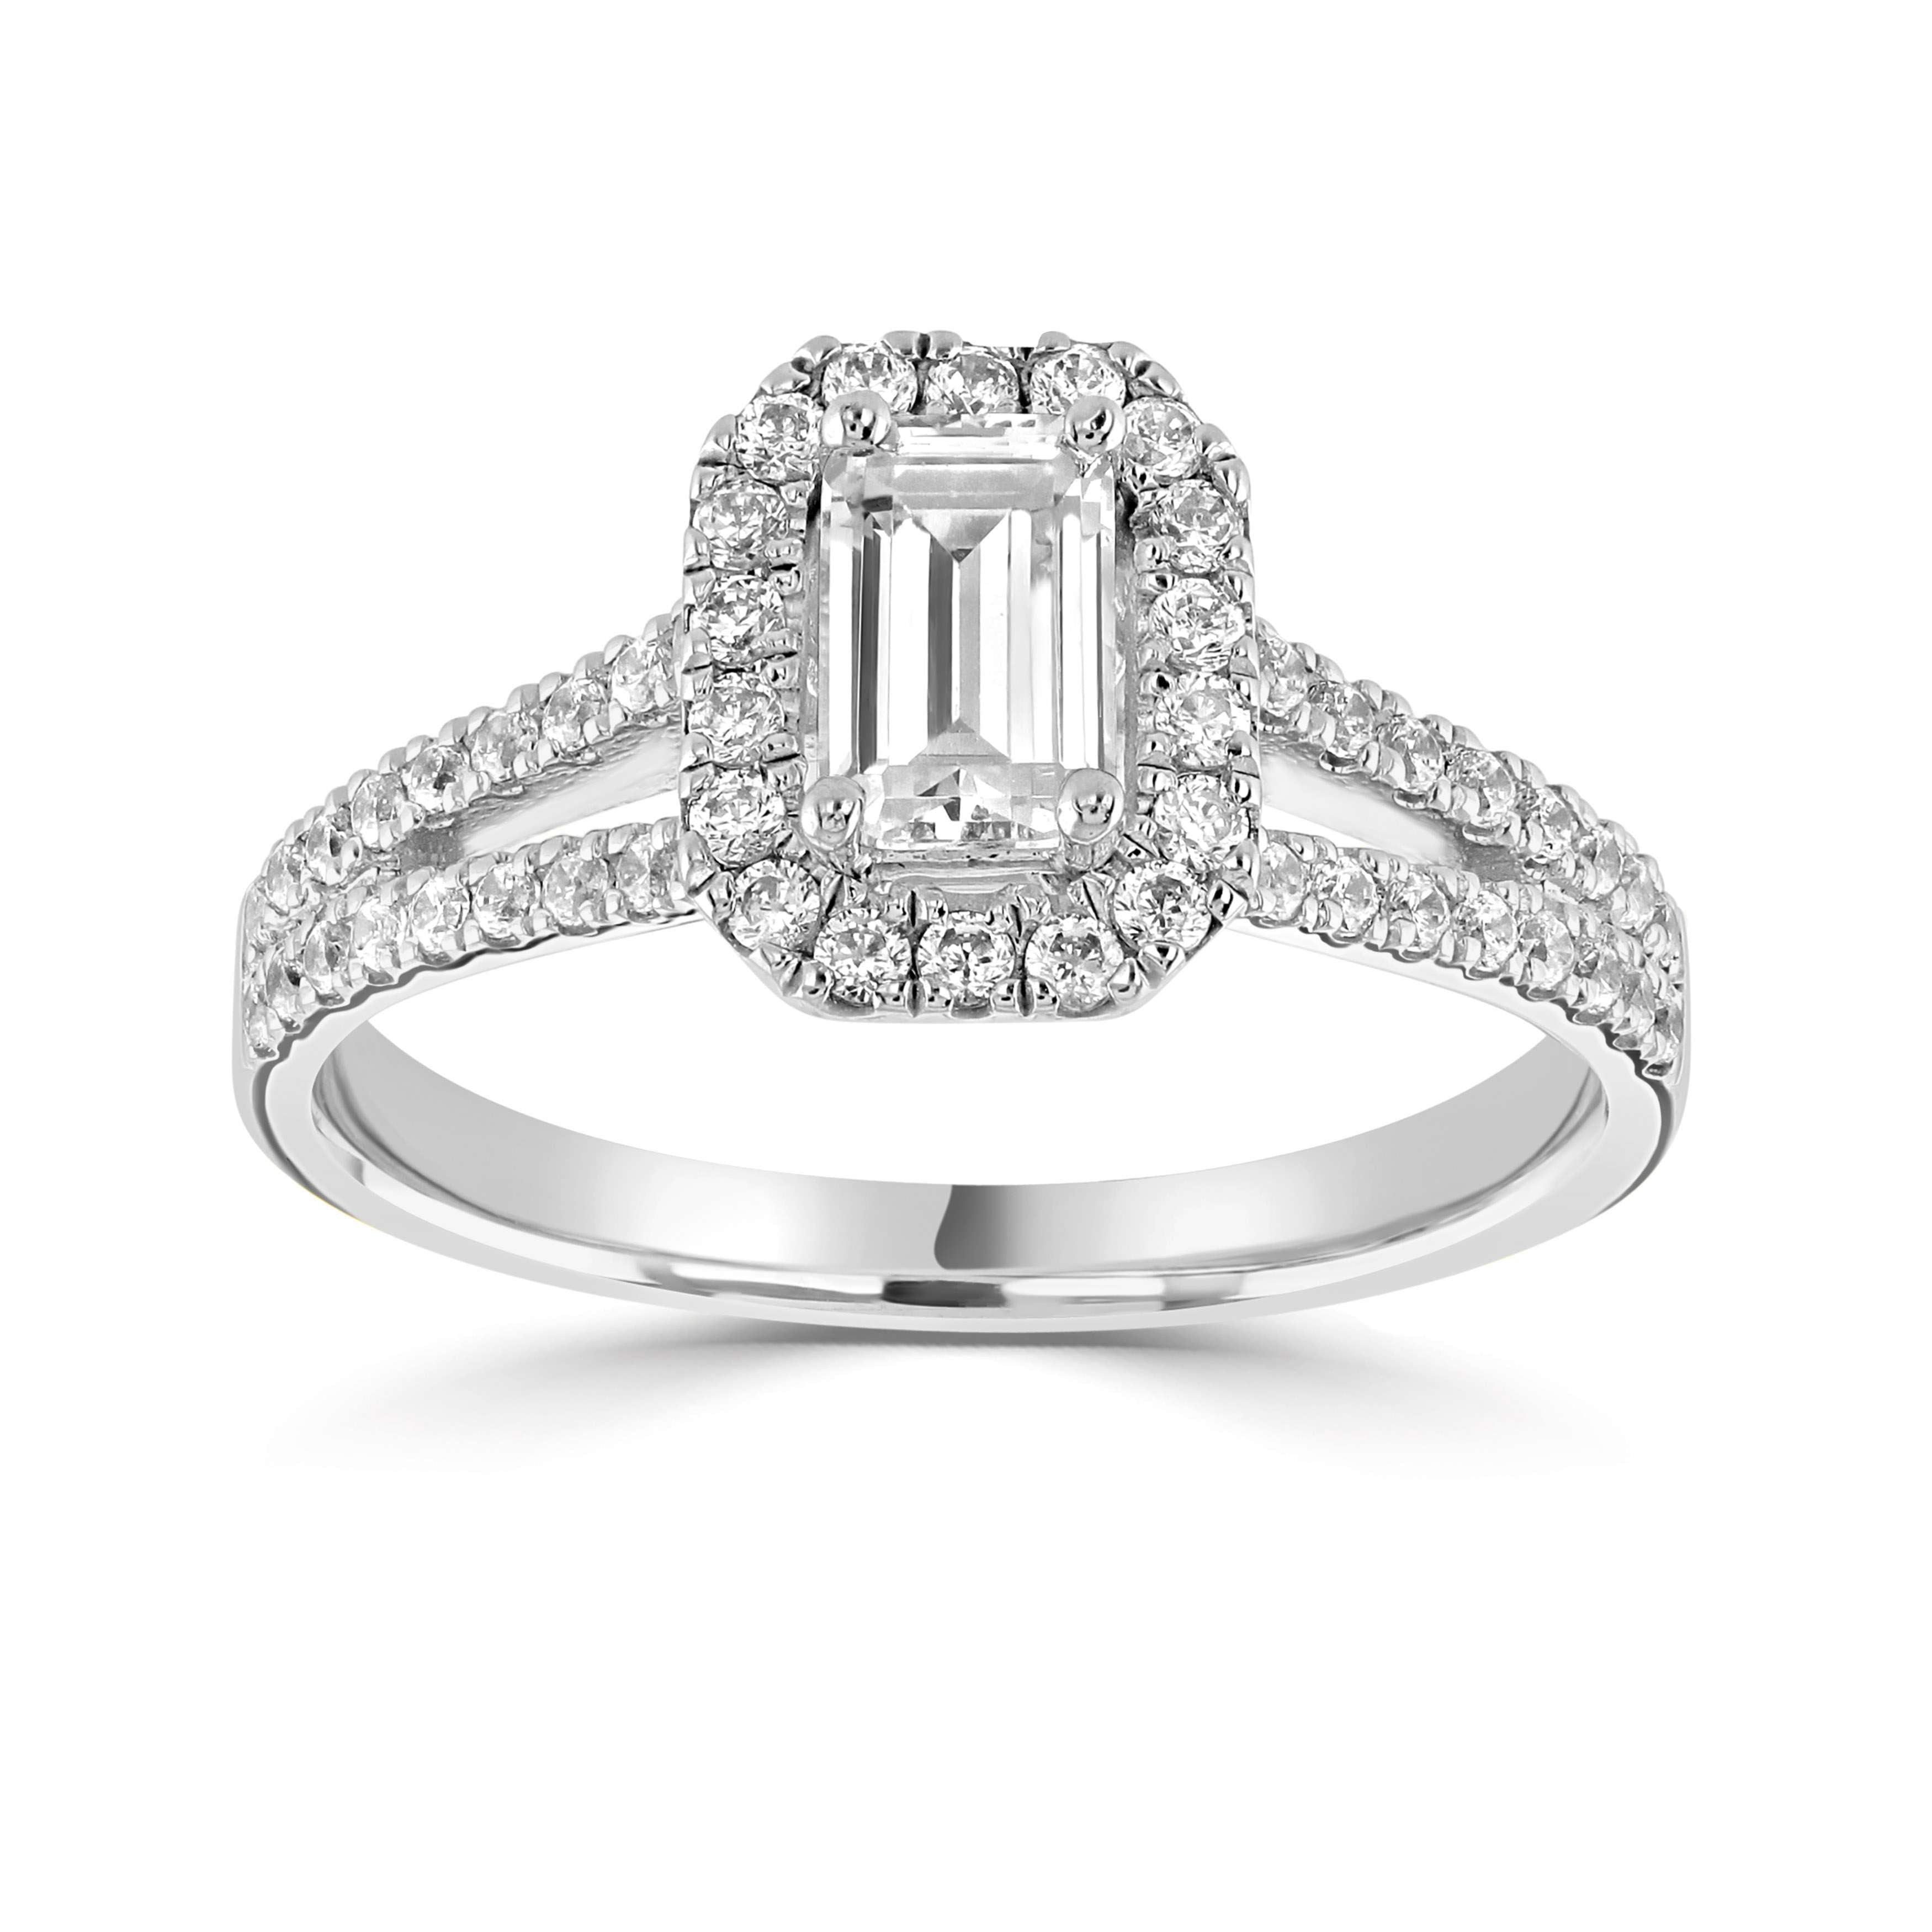 Magnolia *Select an Emerald Cut Diamond 0.40ct or above